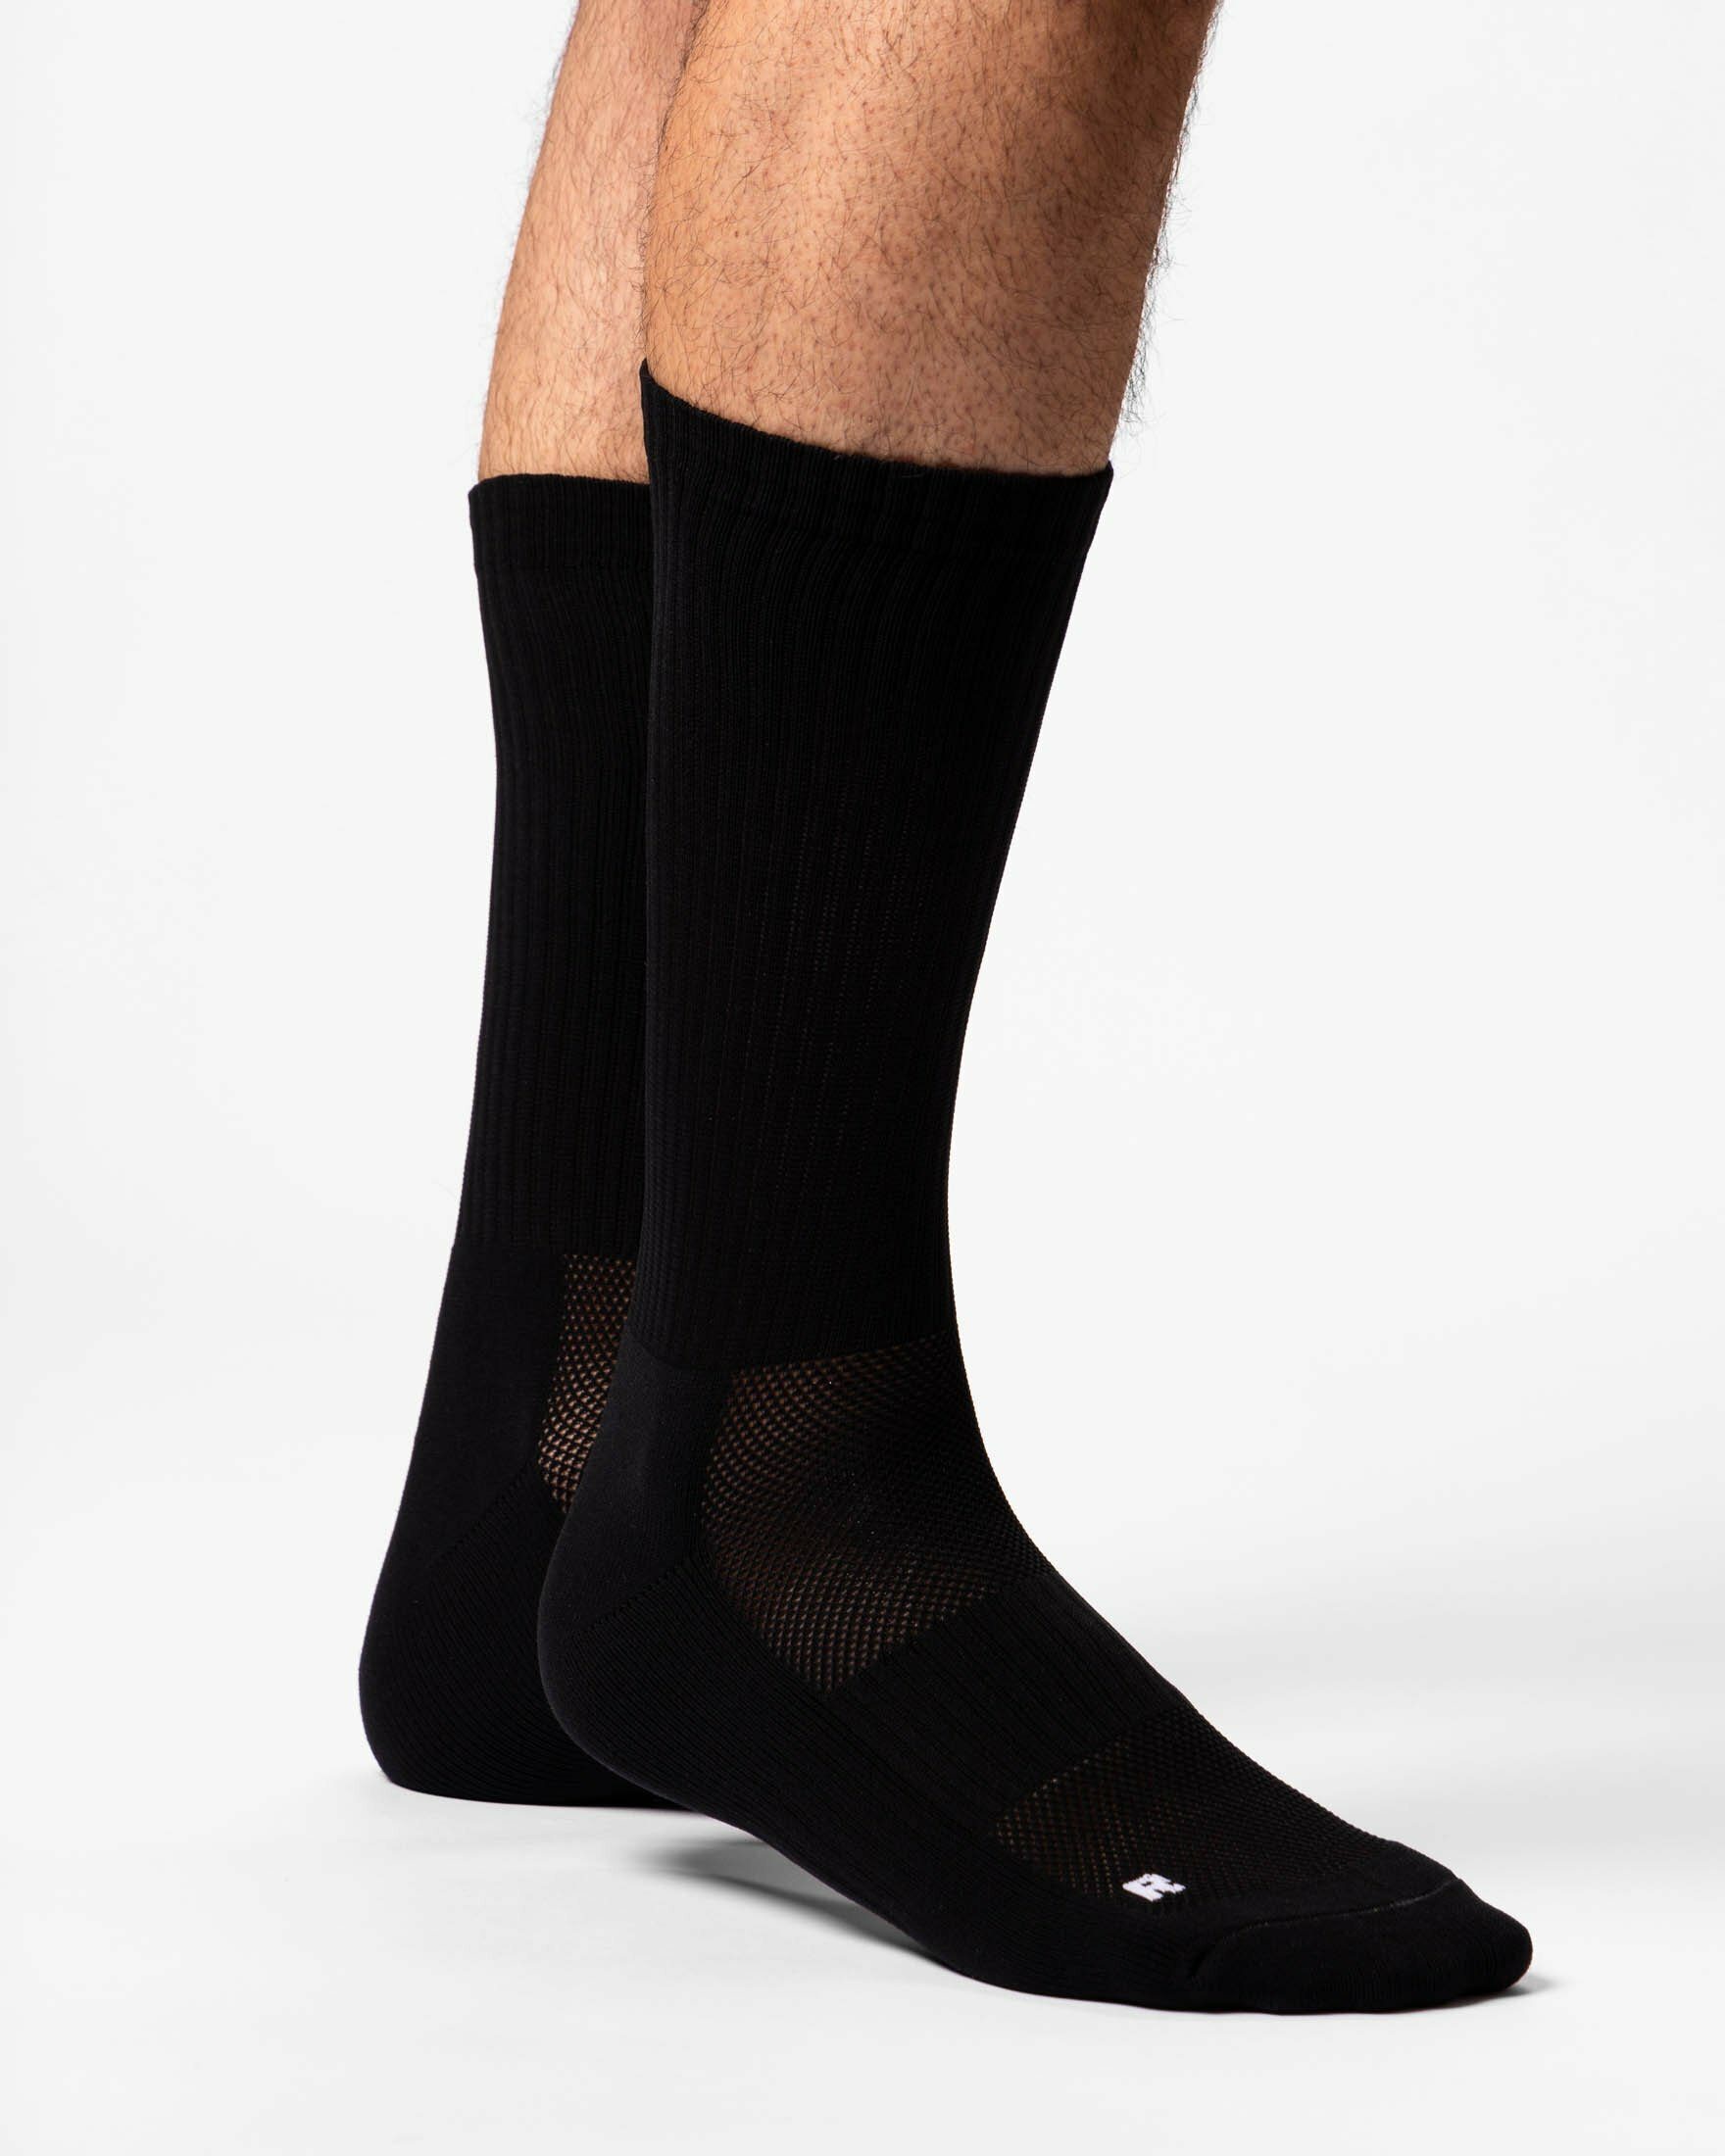 SnocksLaufsockenRunning Socks für Damen & Herren 